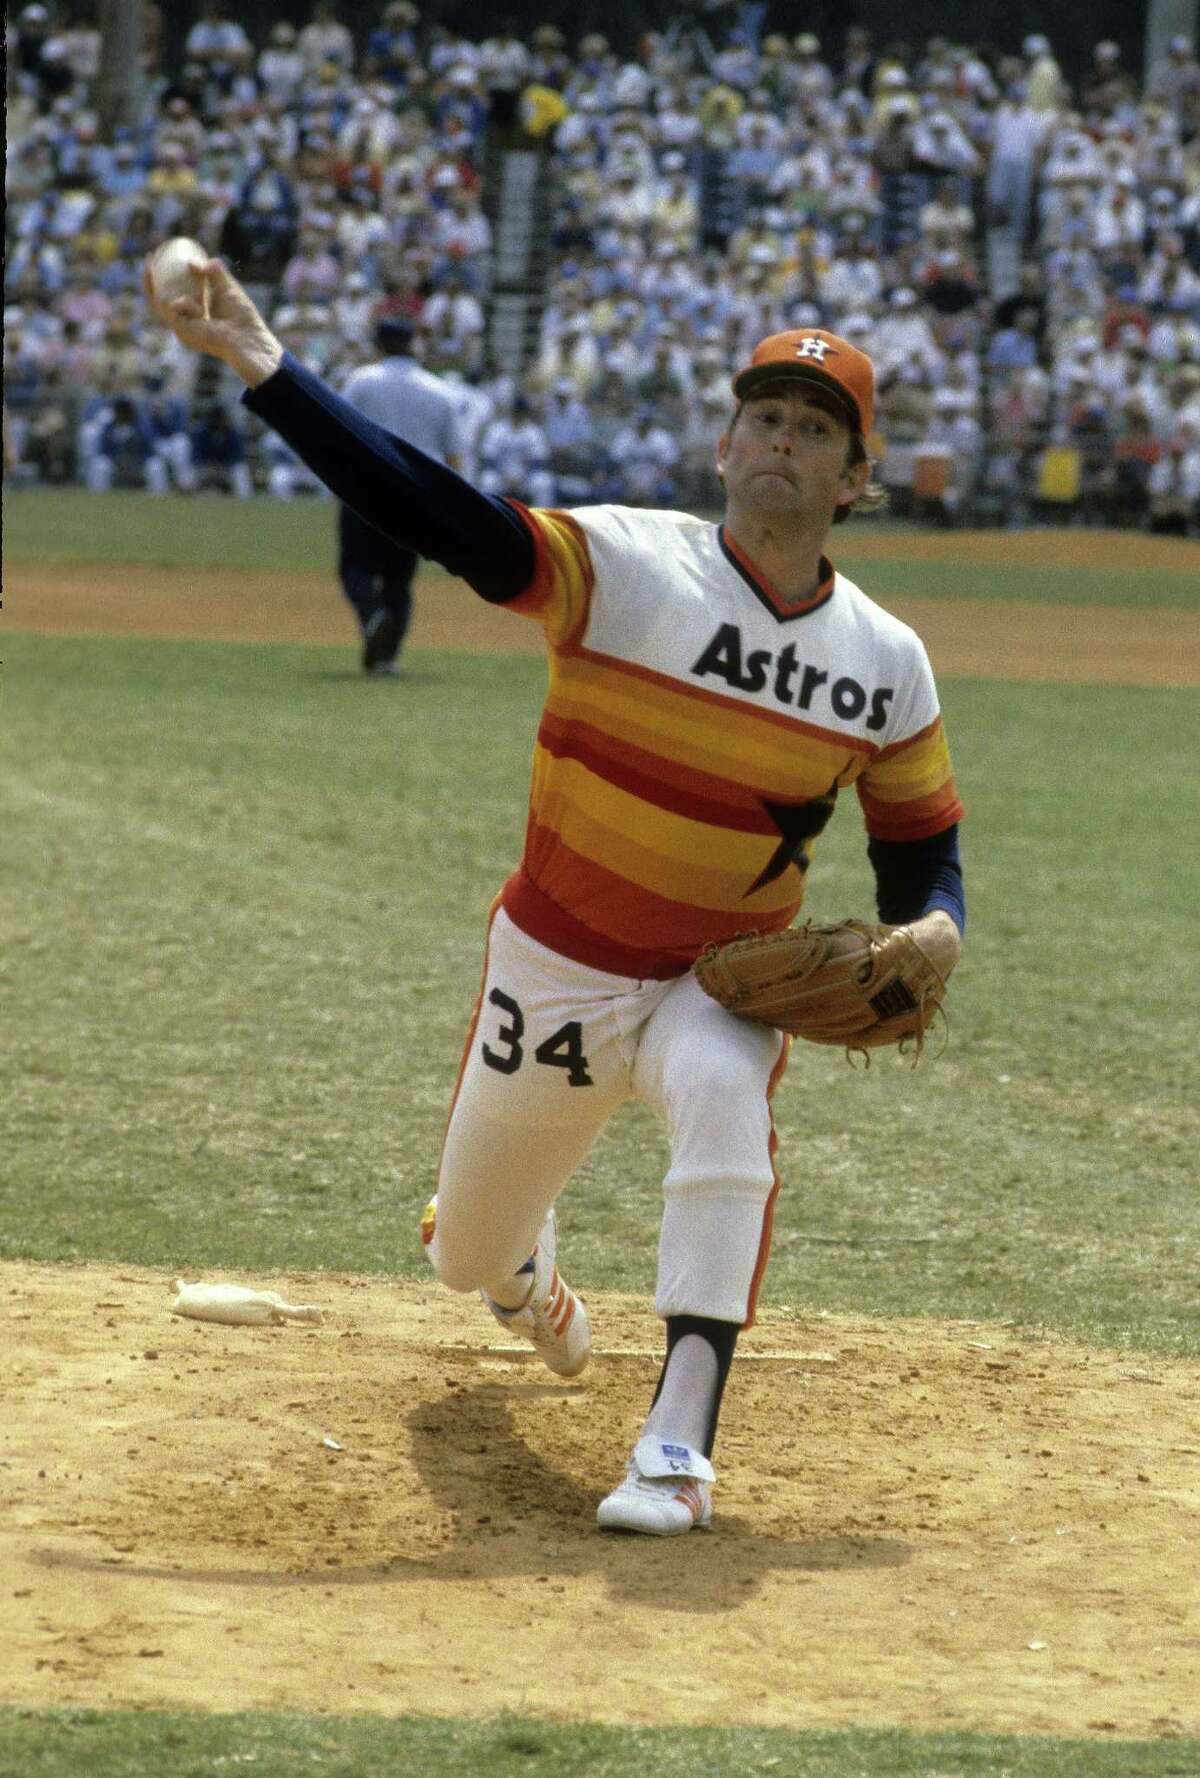 Original Concept for the 1975 Astros Rainbow Gut Uniforms